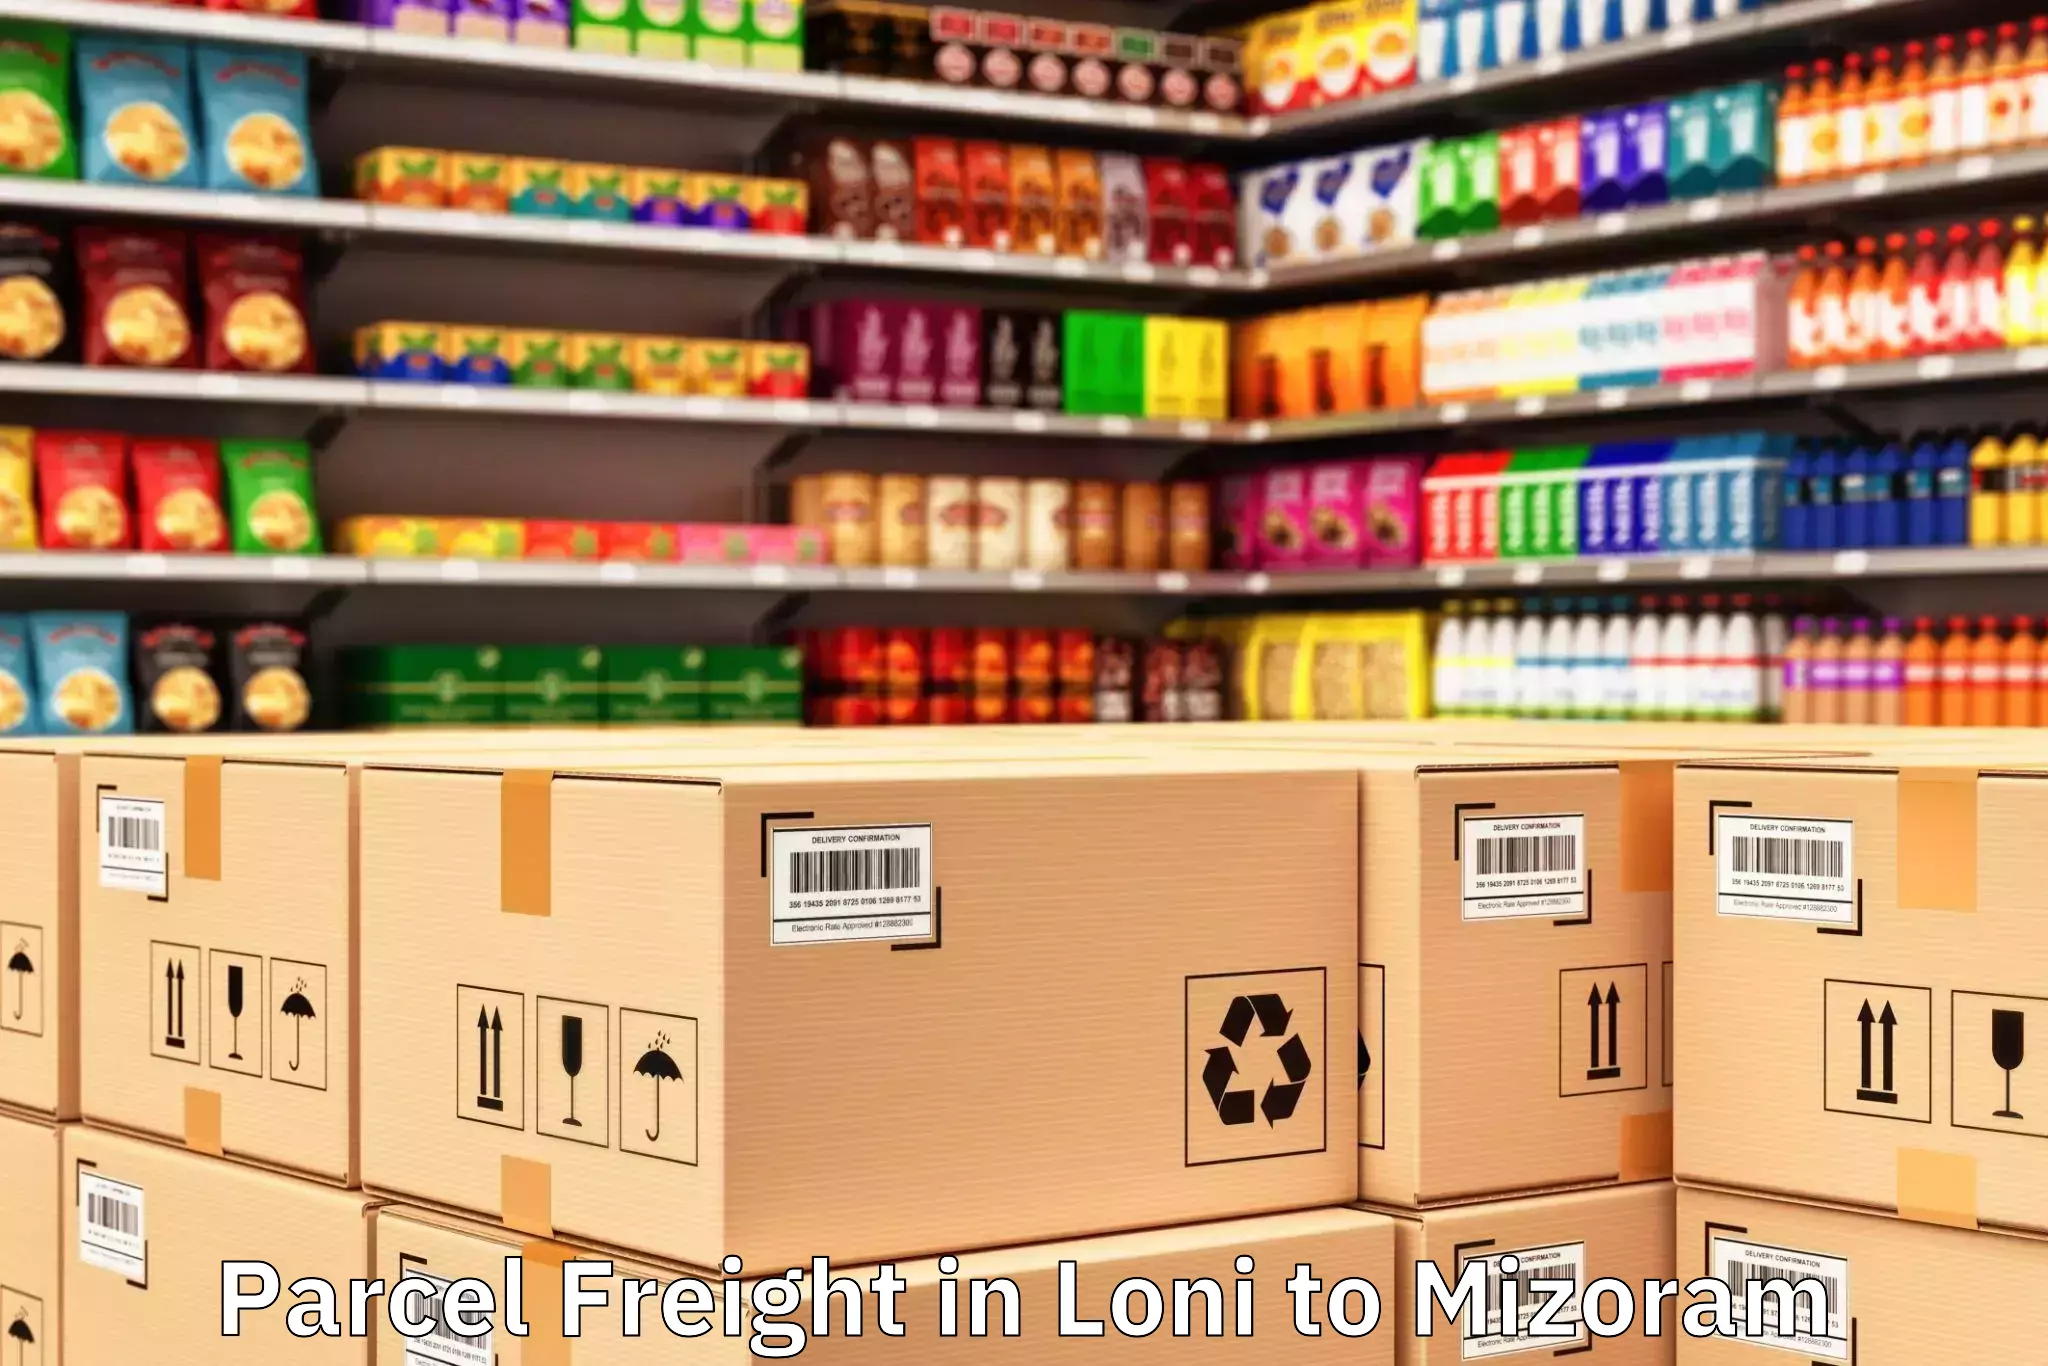 Professional Loni to Mizoram Parcel Freight